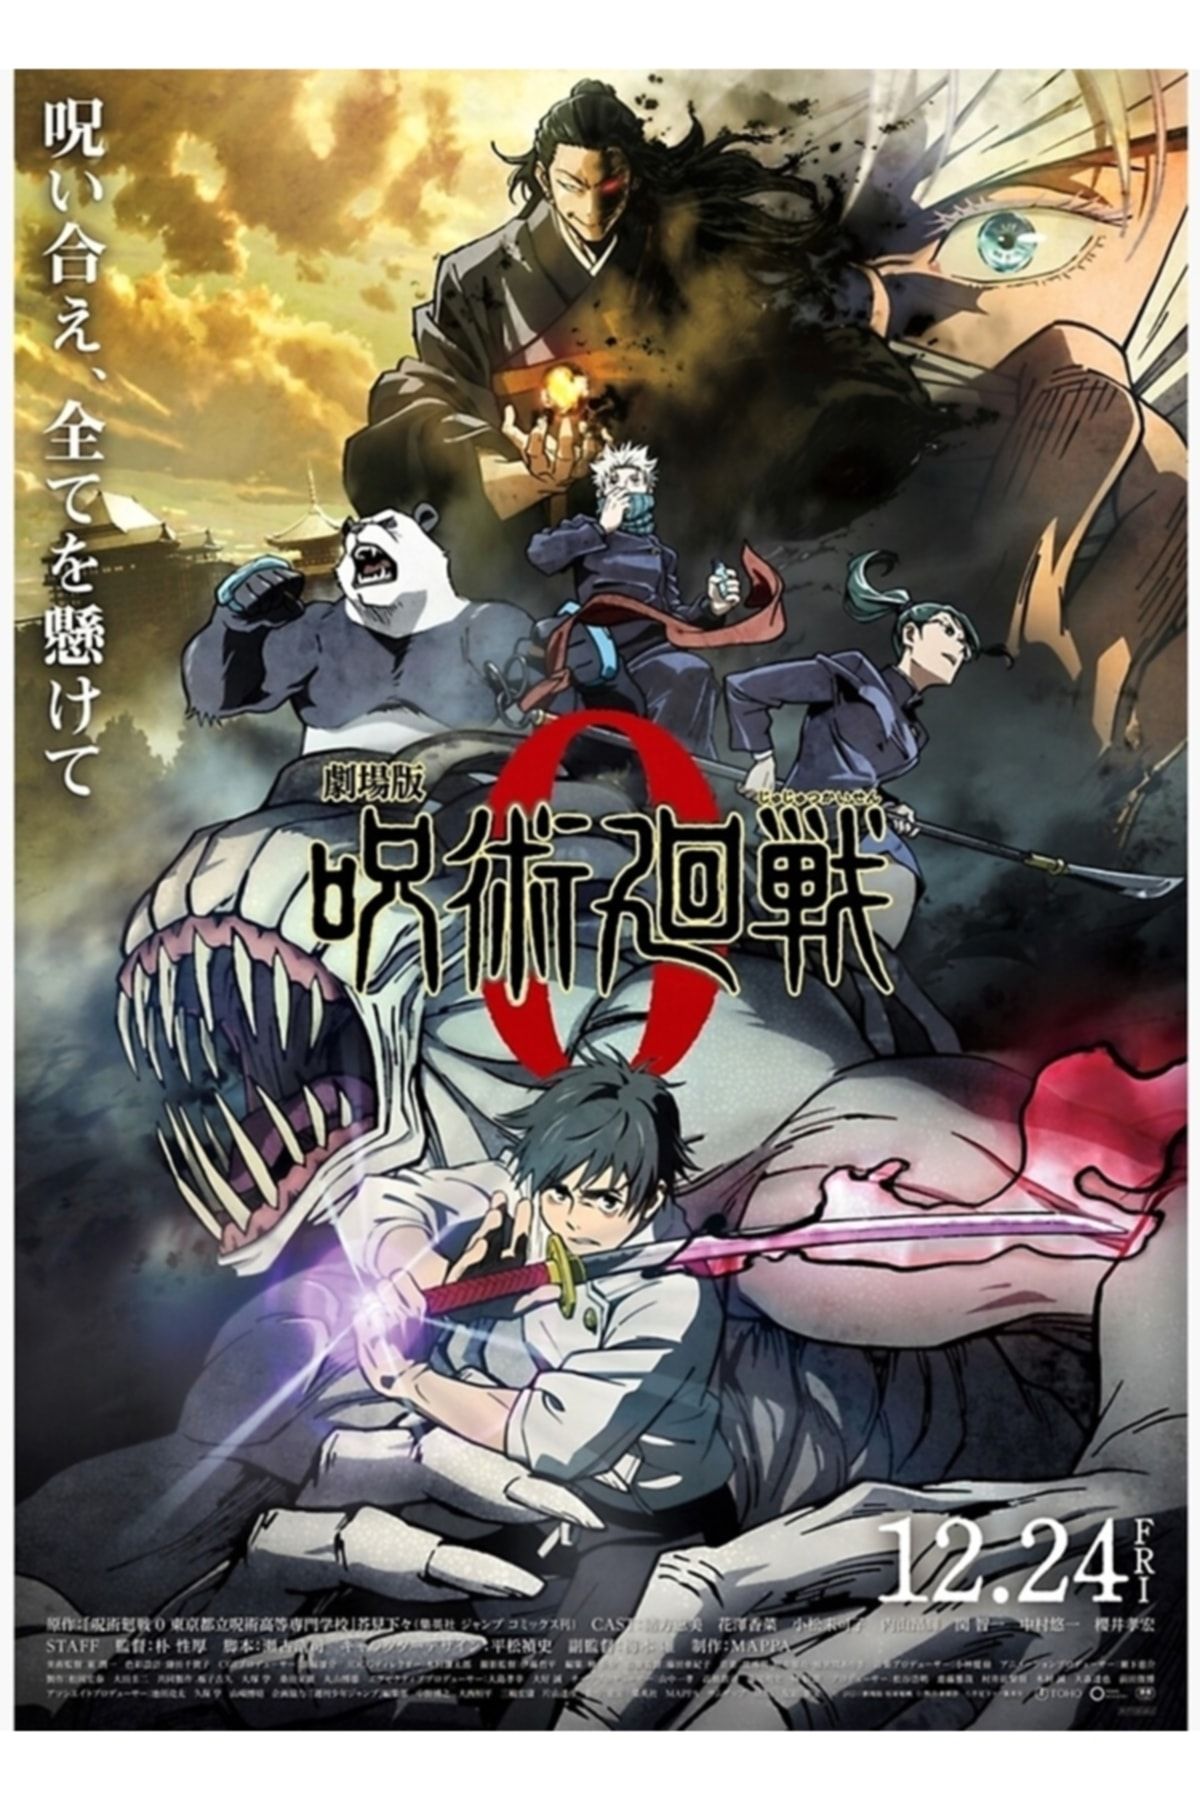 Universal [4k] Jujutsu Kaisen Film - Jjk 0 Anime Resmi Görsel Tablo Ahşap Poster Dekoratif